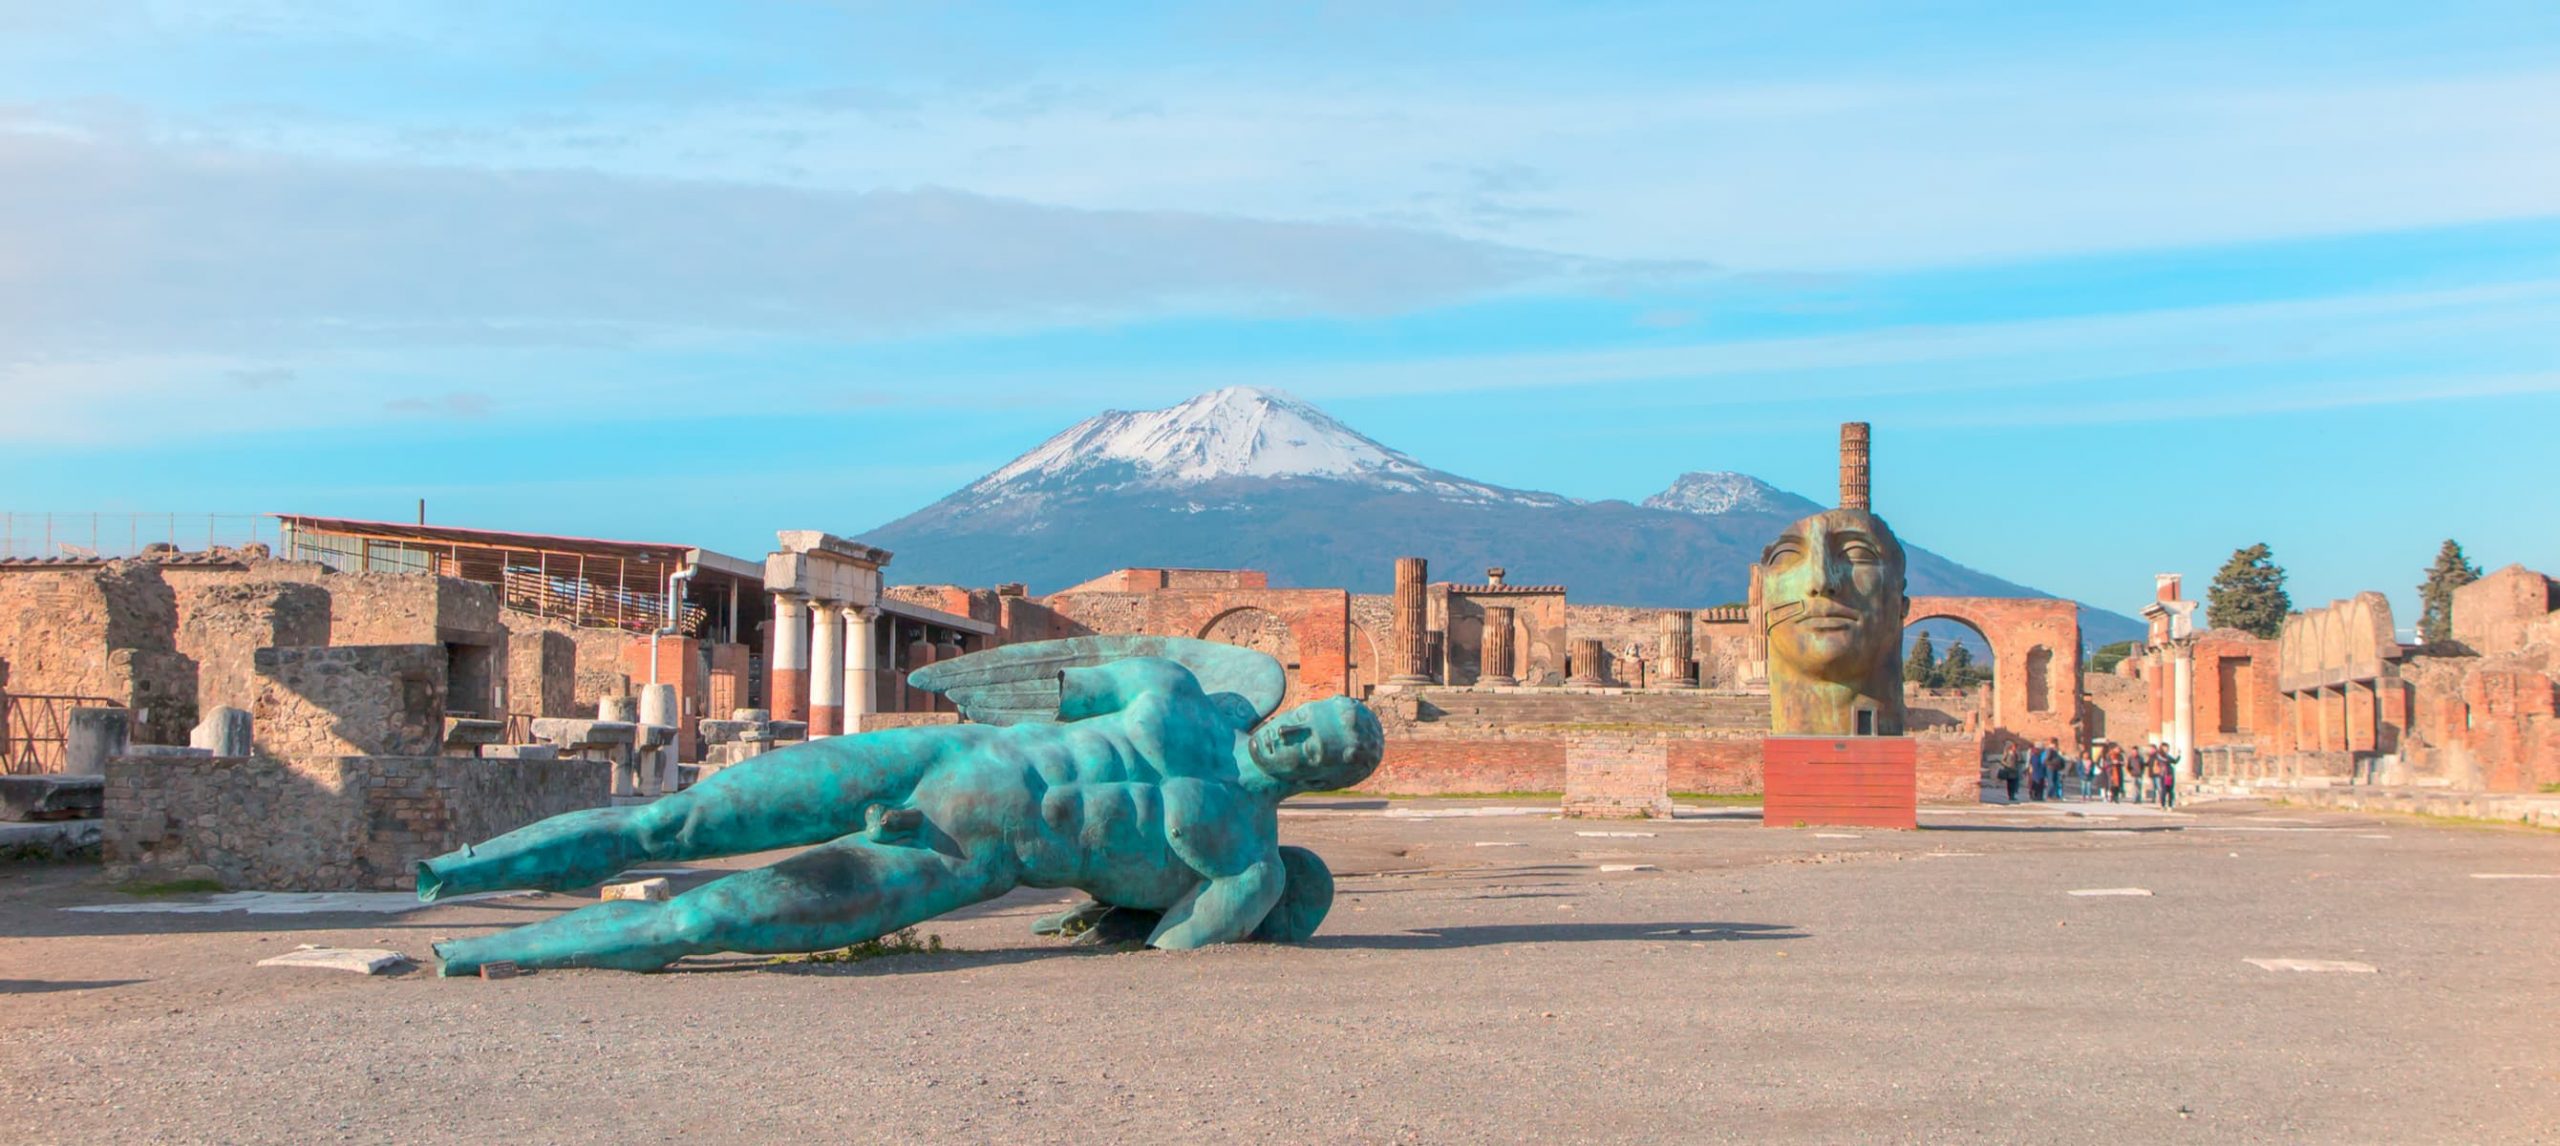 The ruins of Pompeii in front of Mount Vesuvius, in Italy.